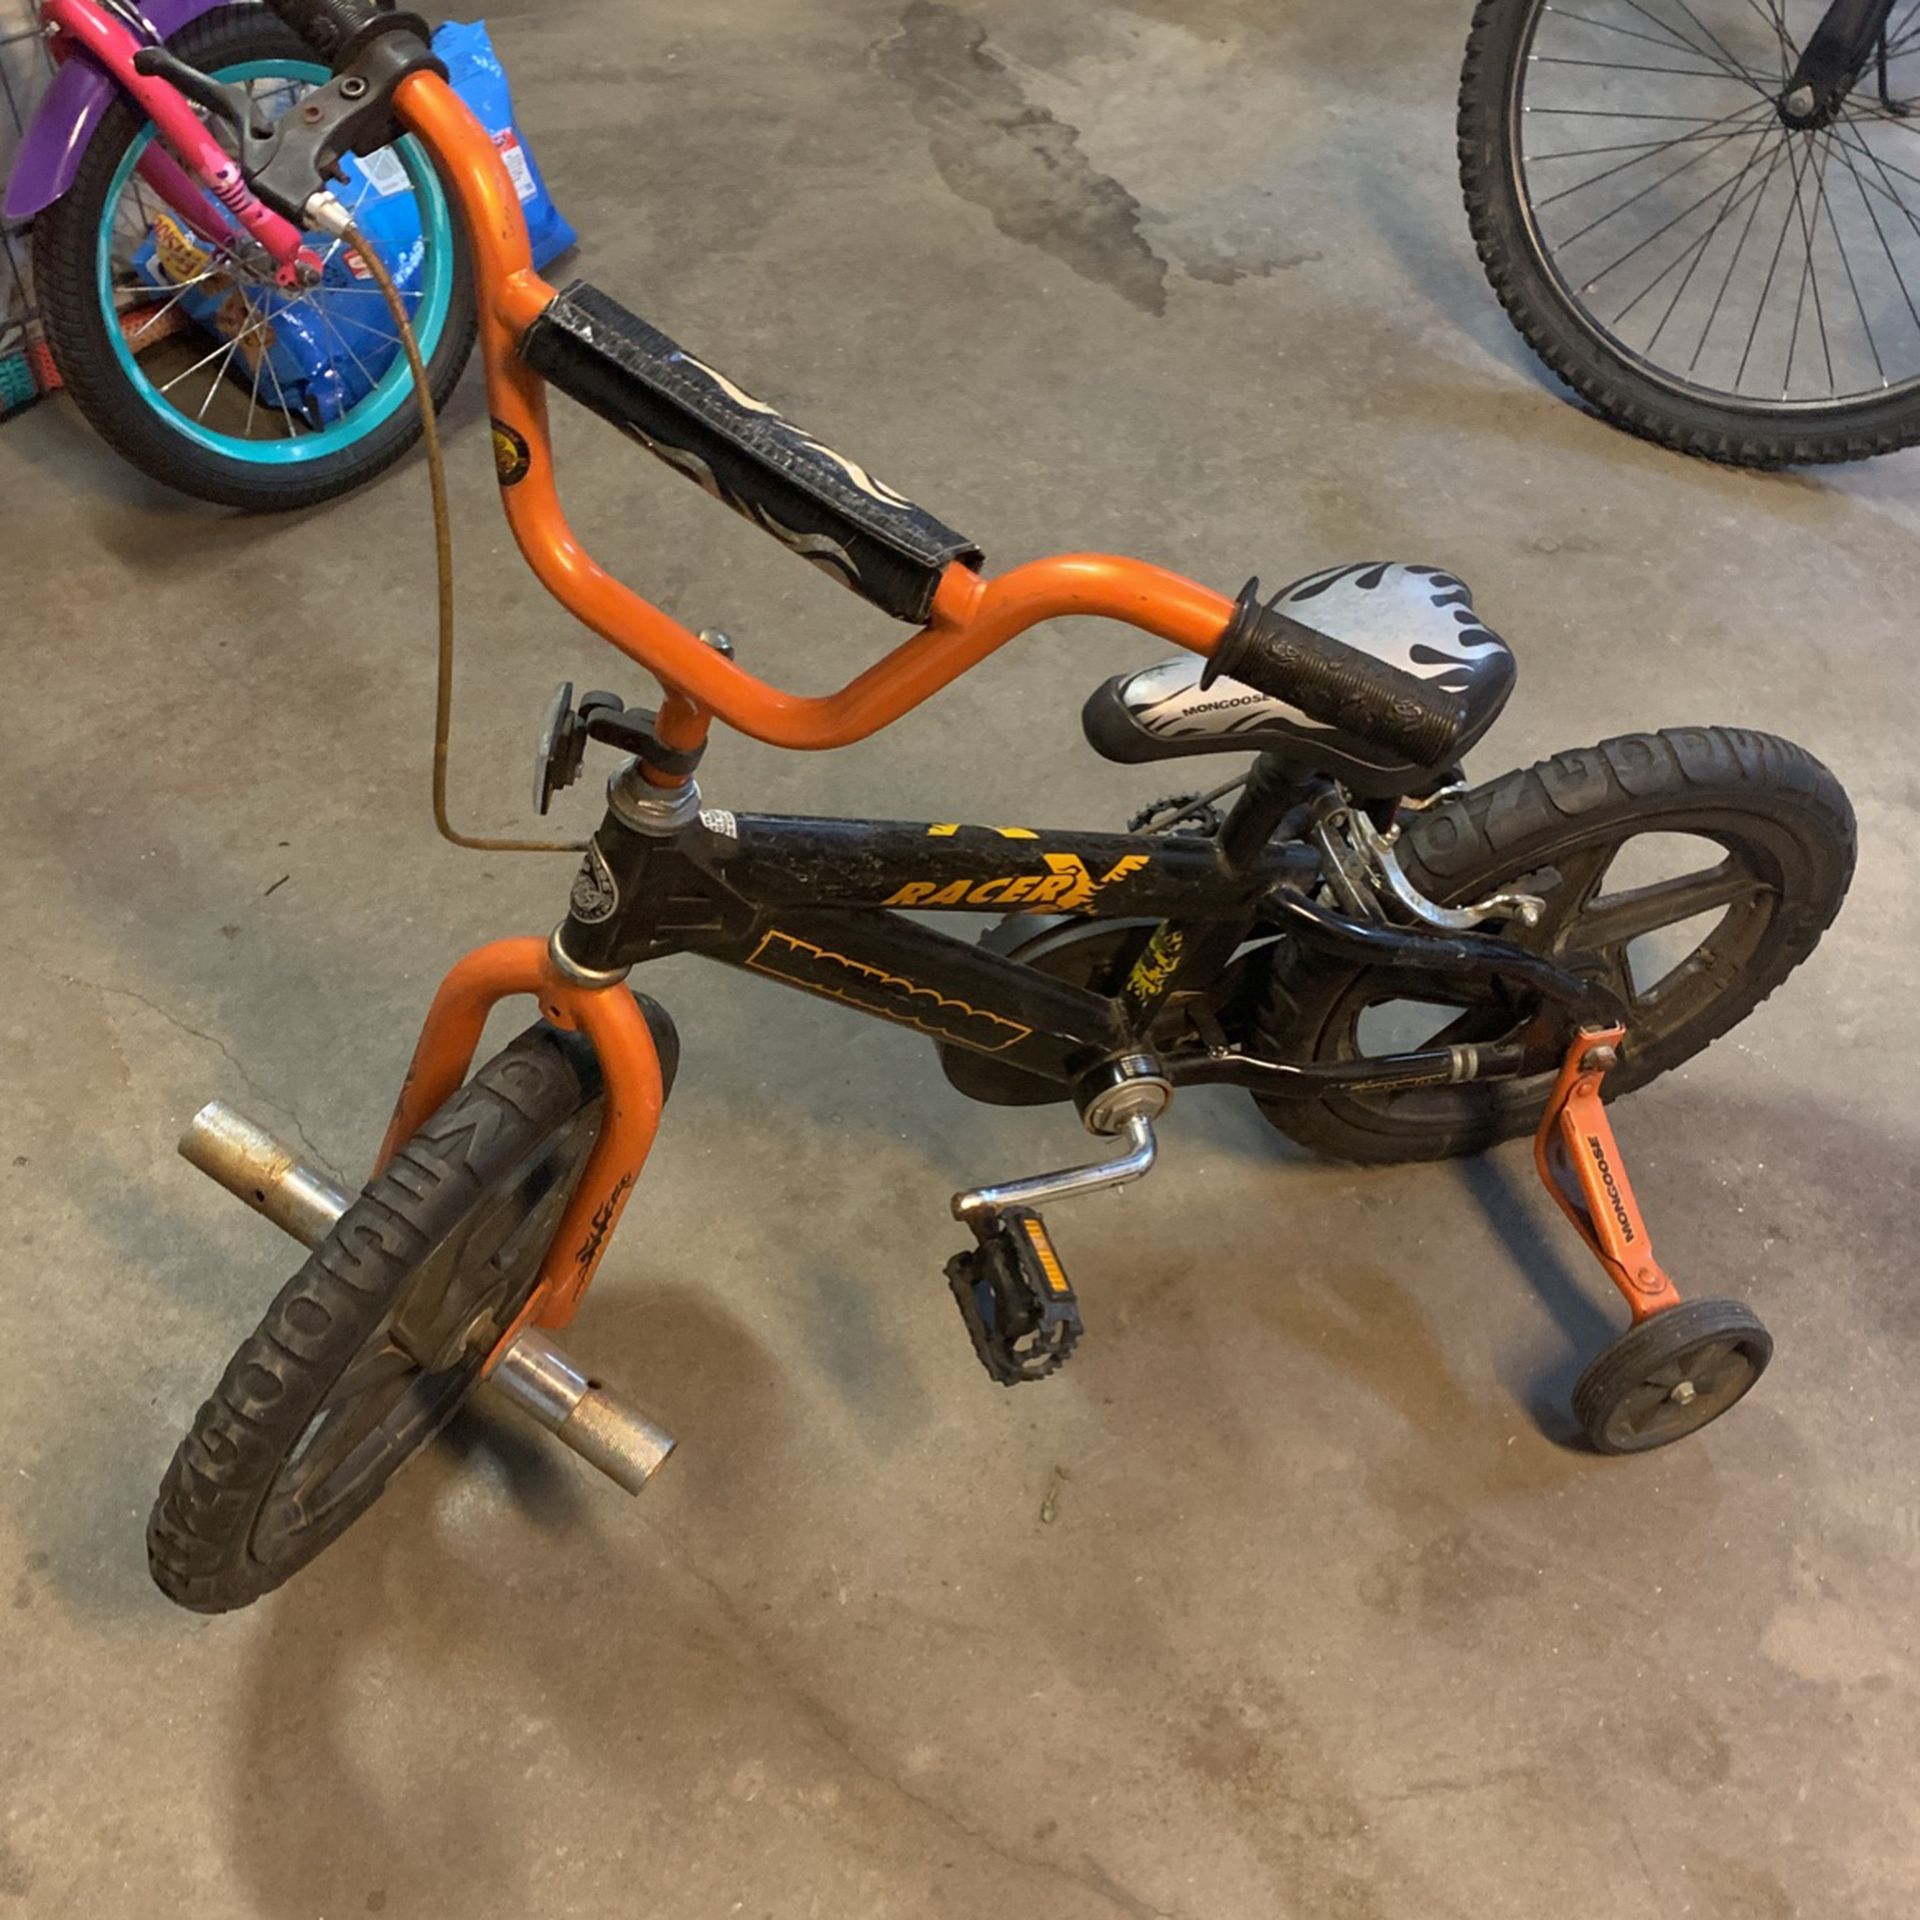 Mongoose Bike with Training Wheels